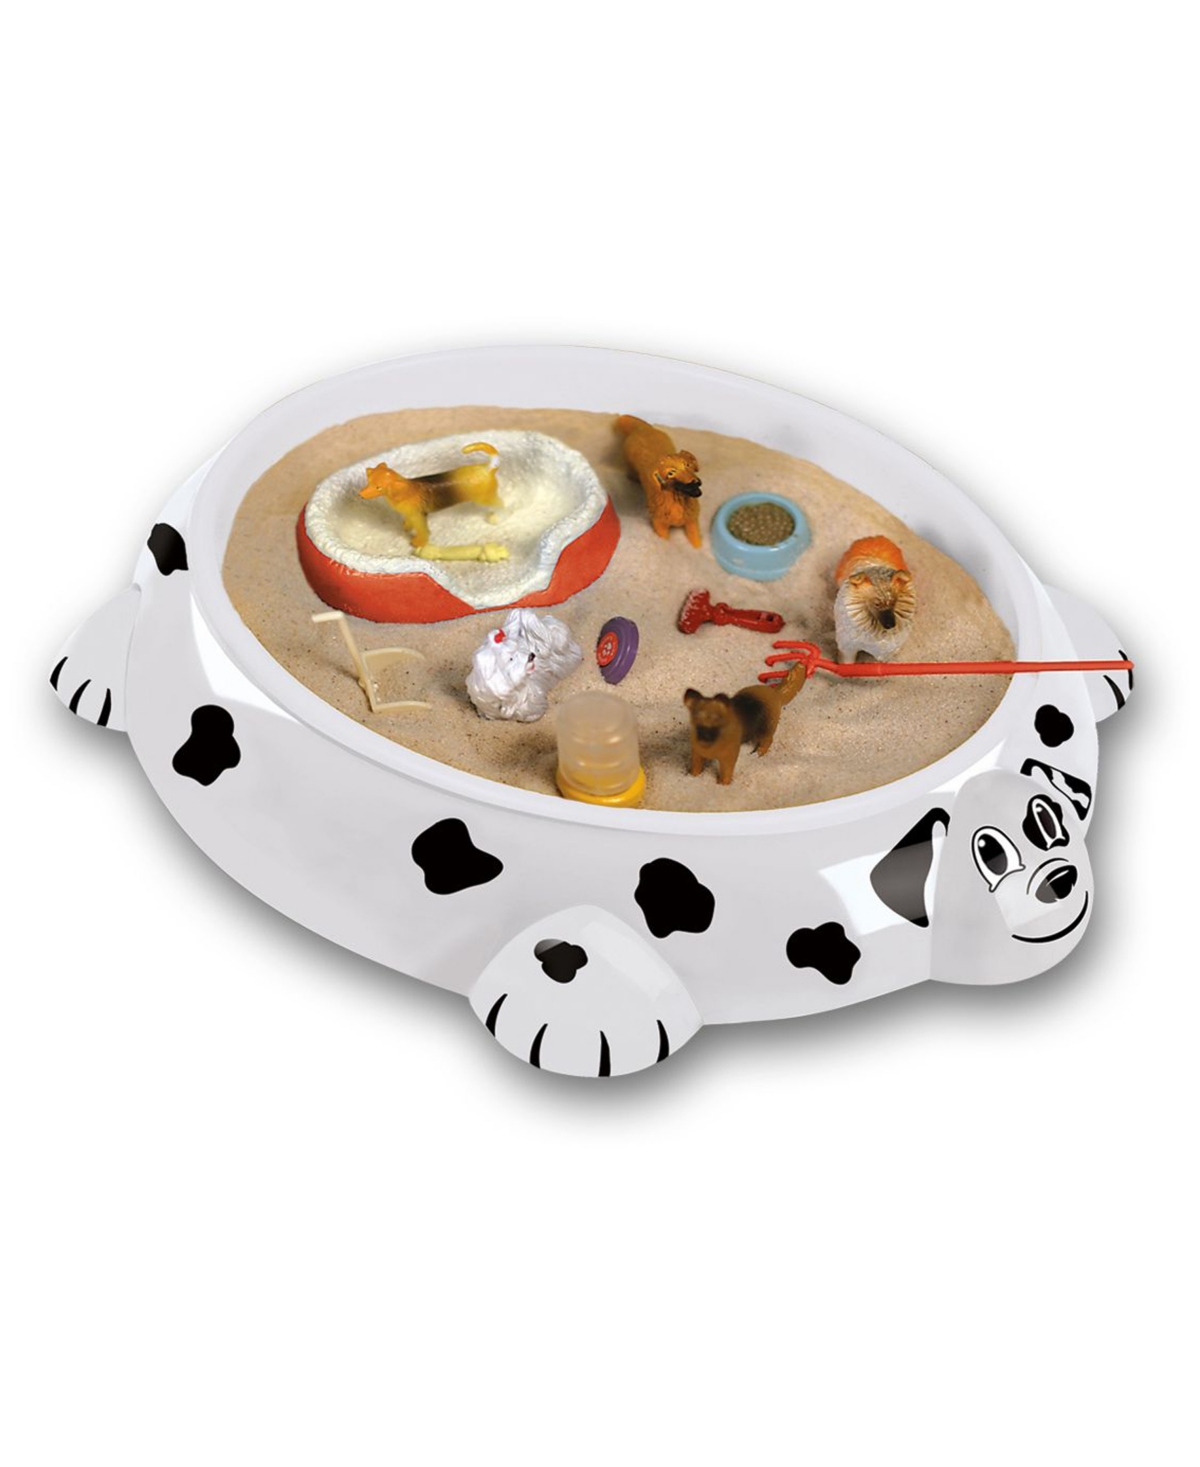 Sandbox Critters Play Set - Dalmatian Dog